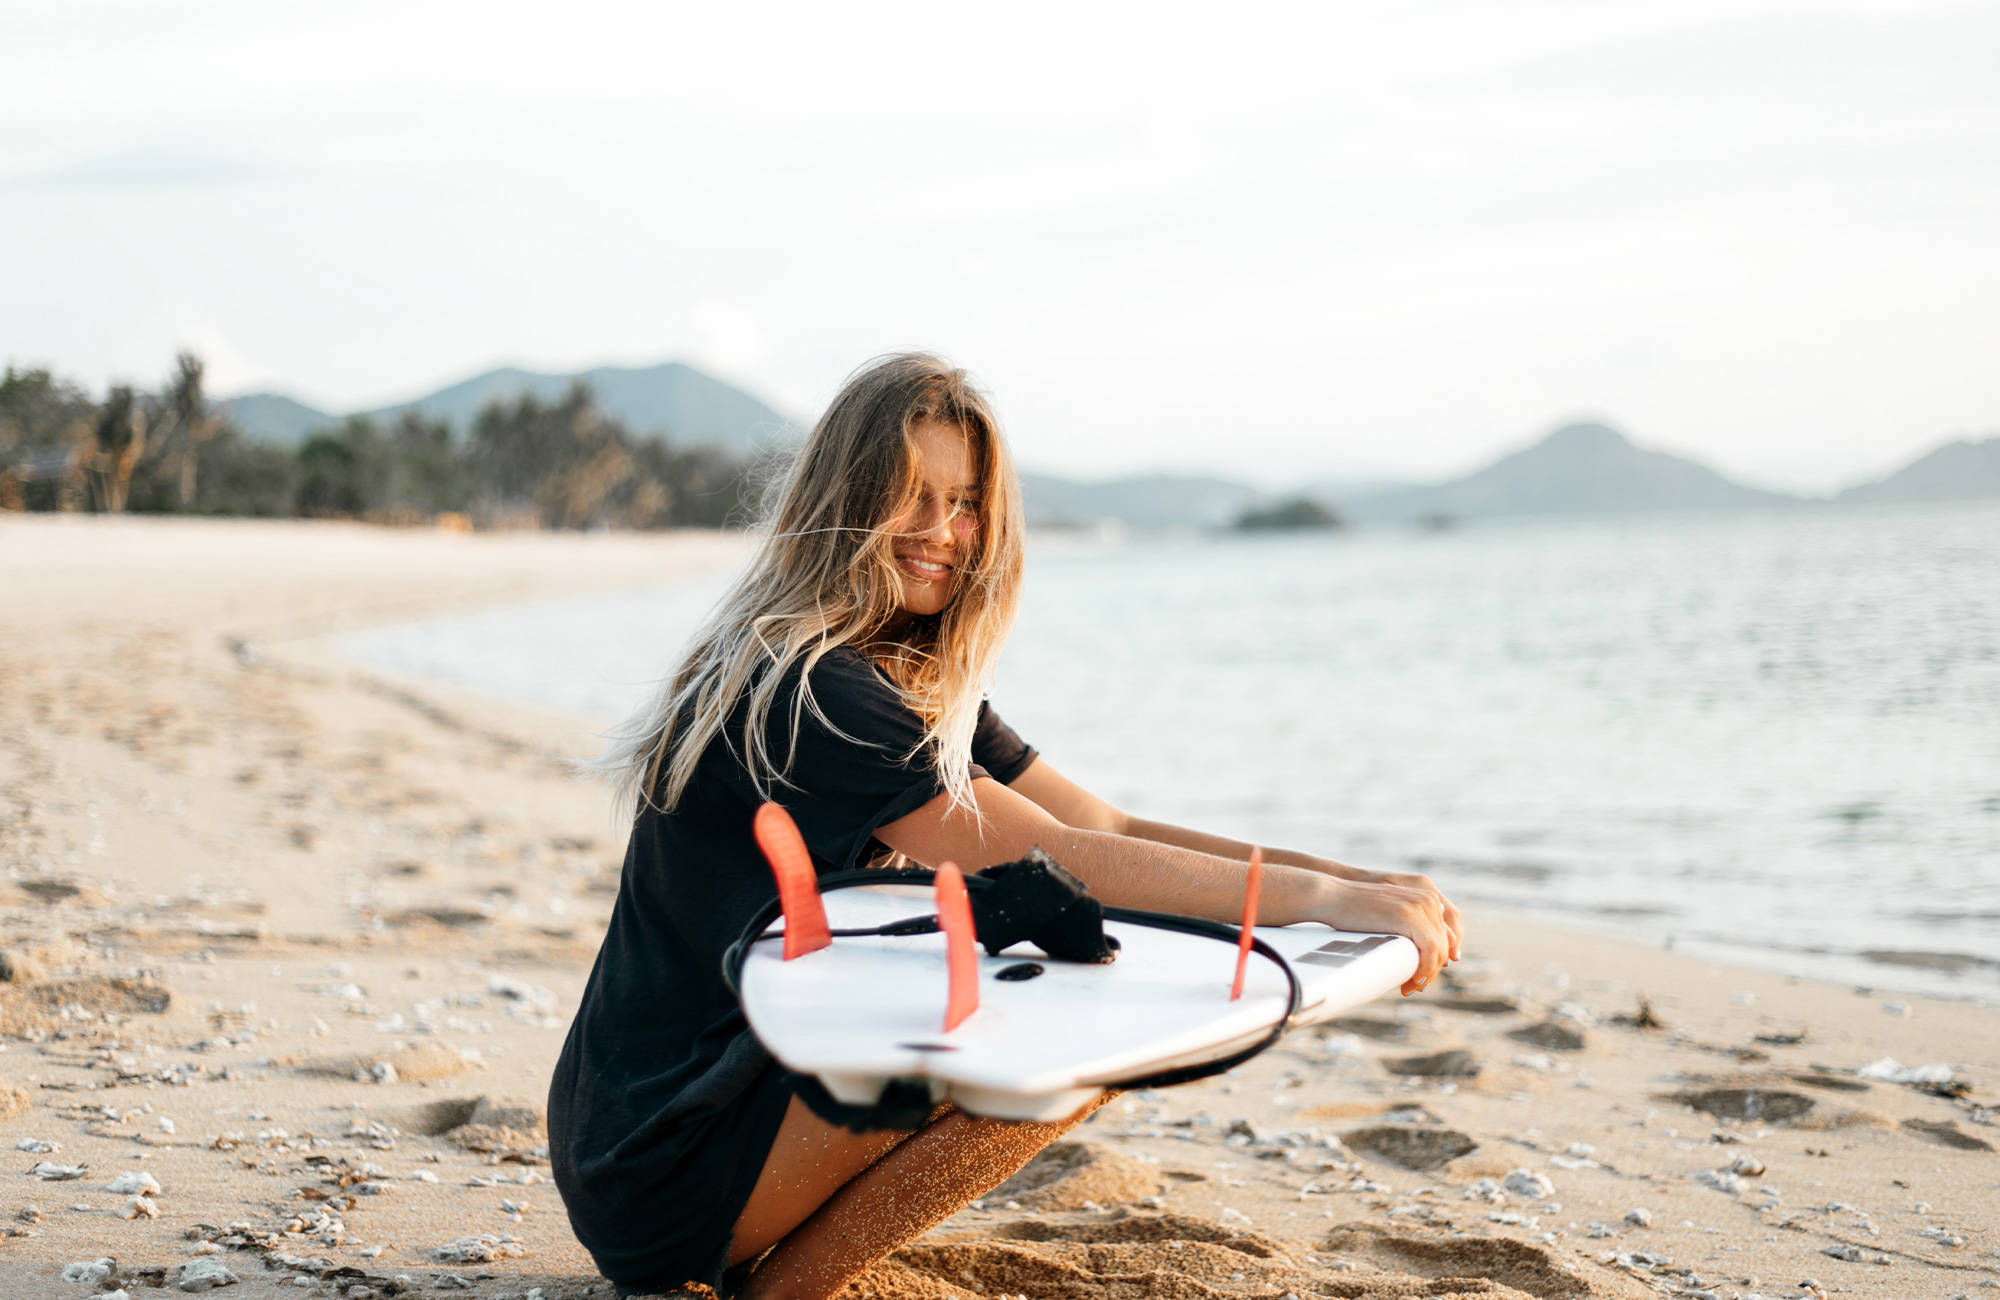 Australia Girl On Beach With Surf Board